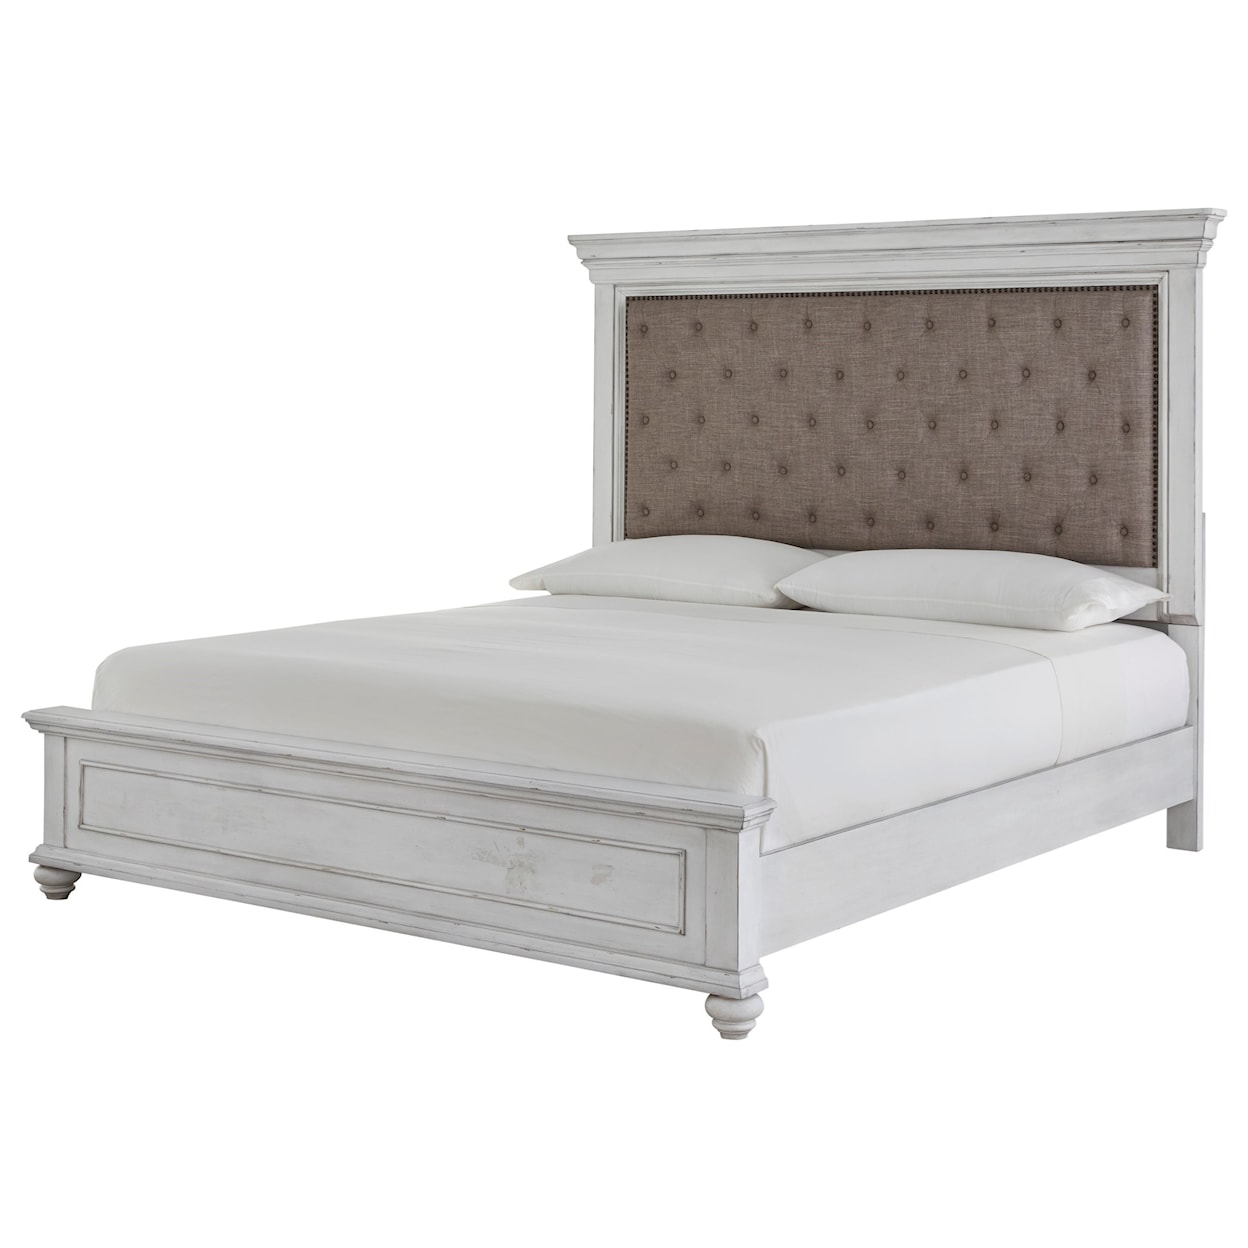 Benchcraft Kanwyn California King Upholstered Bed